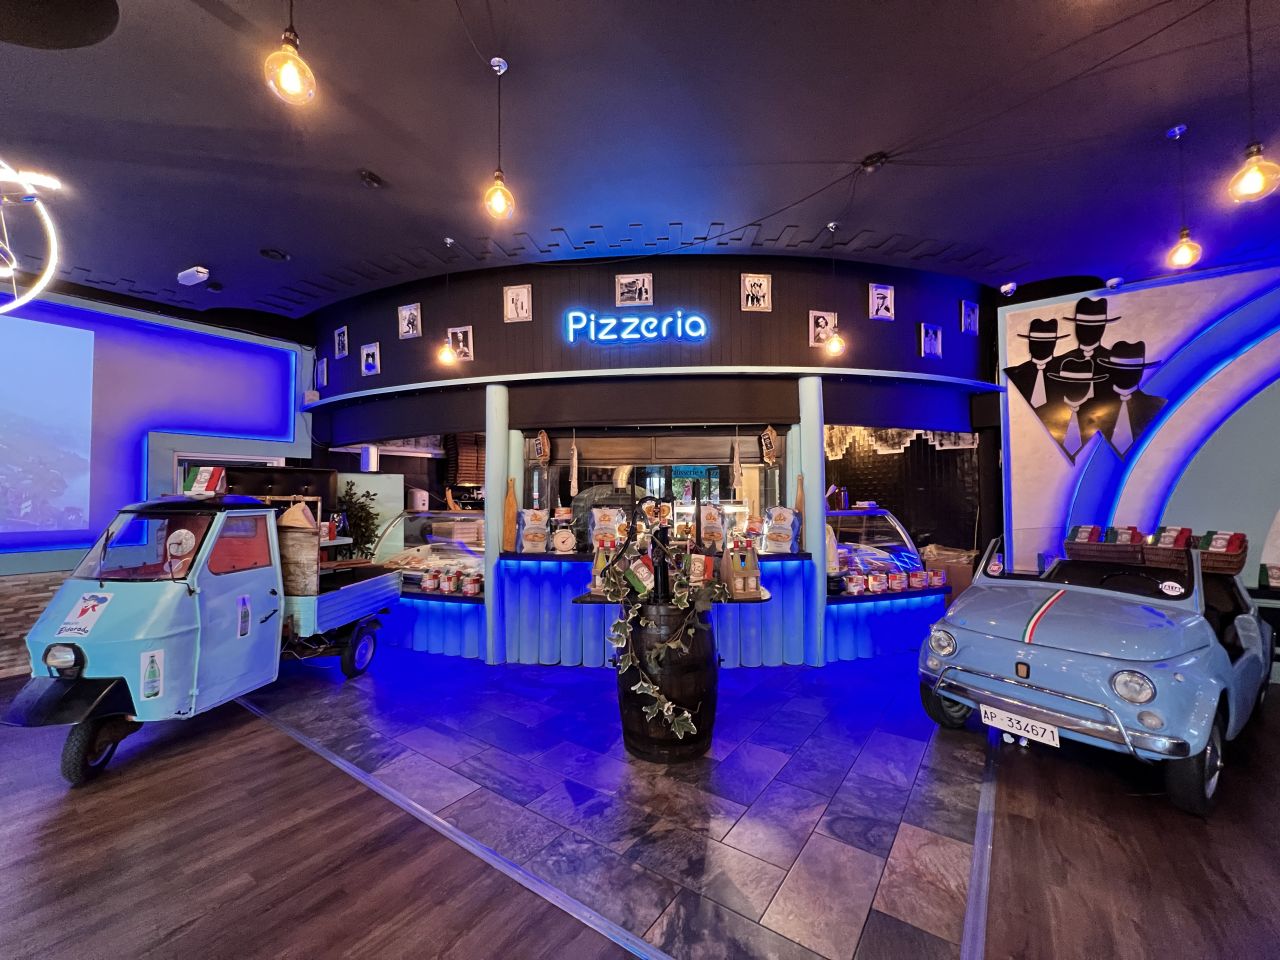 Studio Gusto Pizzeria - Italian (Neapolitan) Pizza Place in Bromley